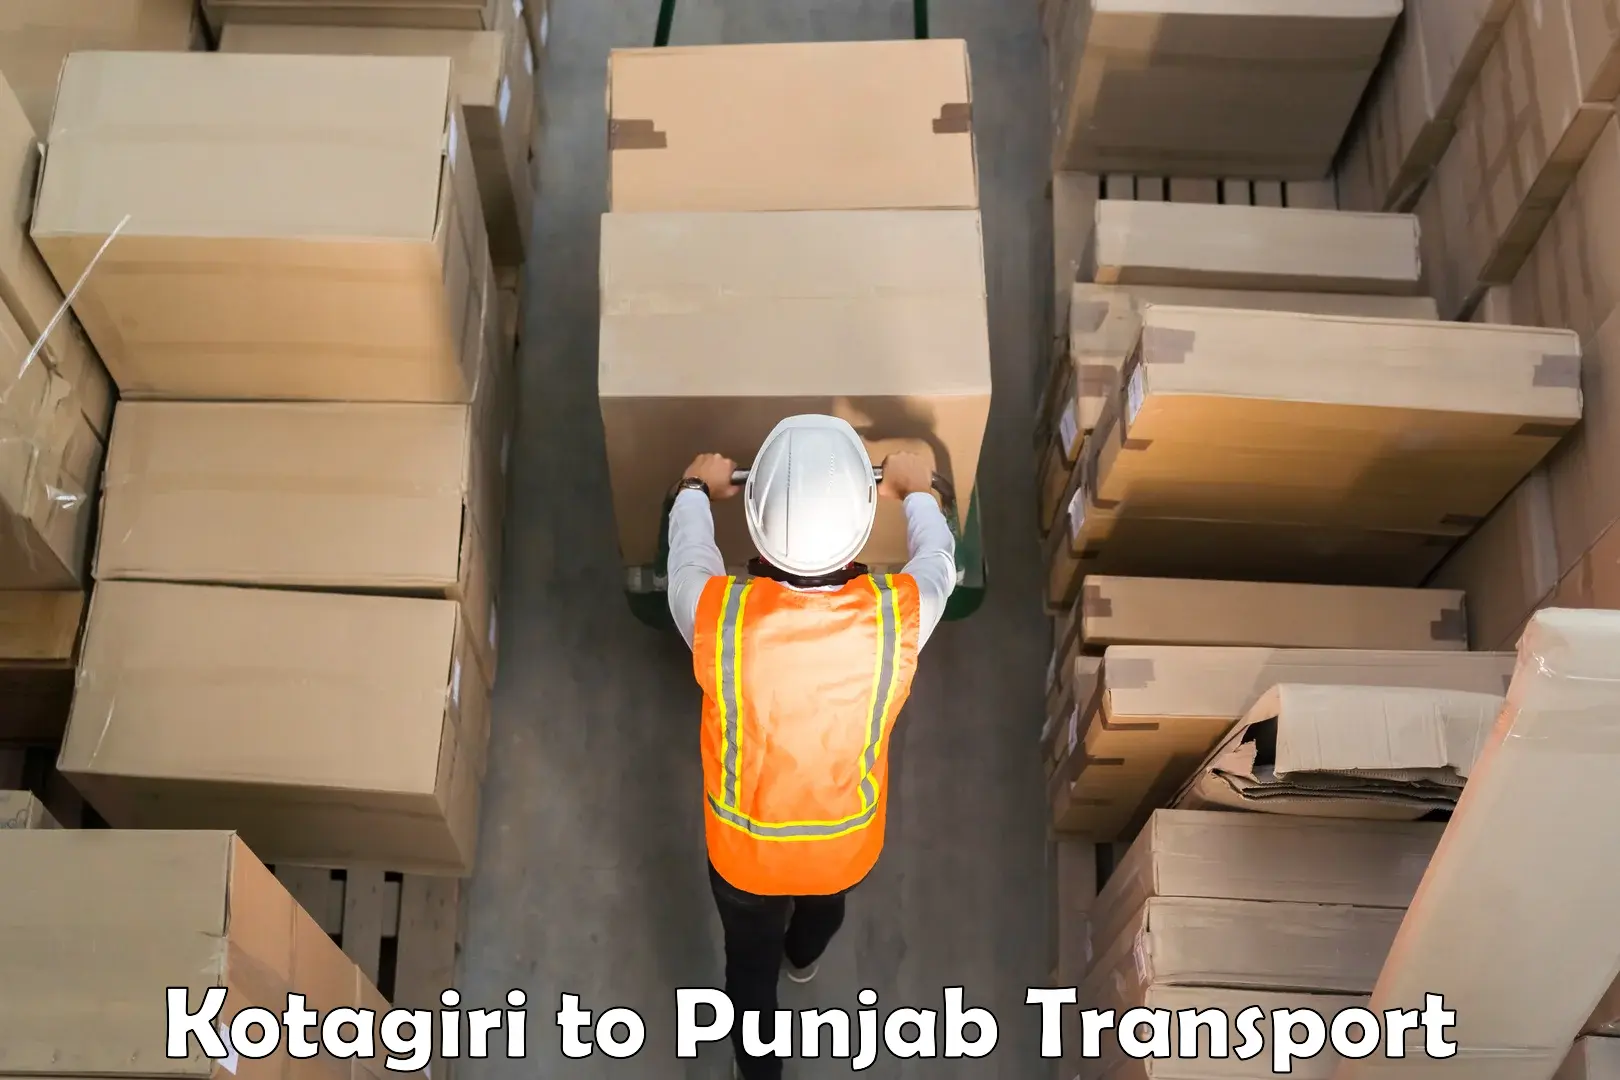 Delivery service Kotagiri to Punjab